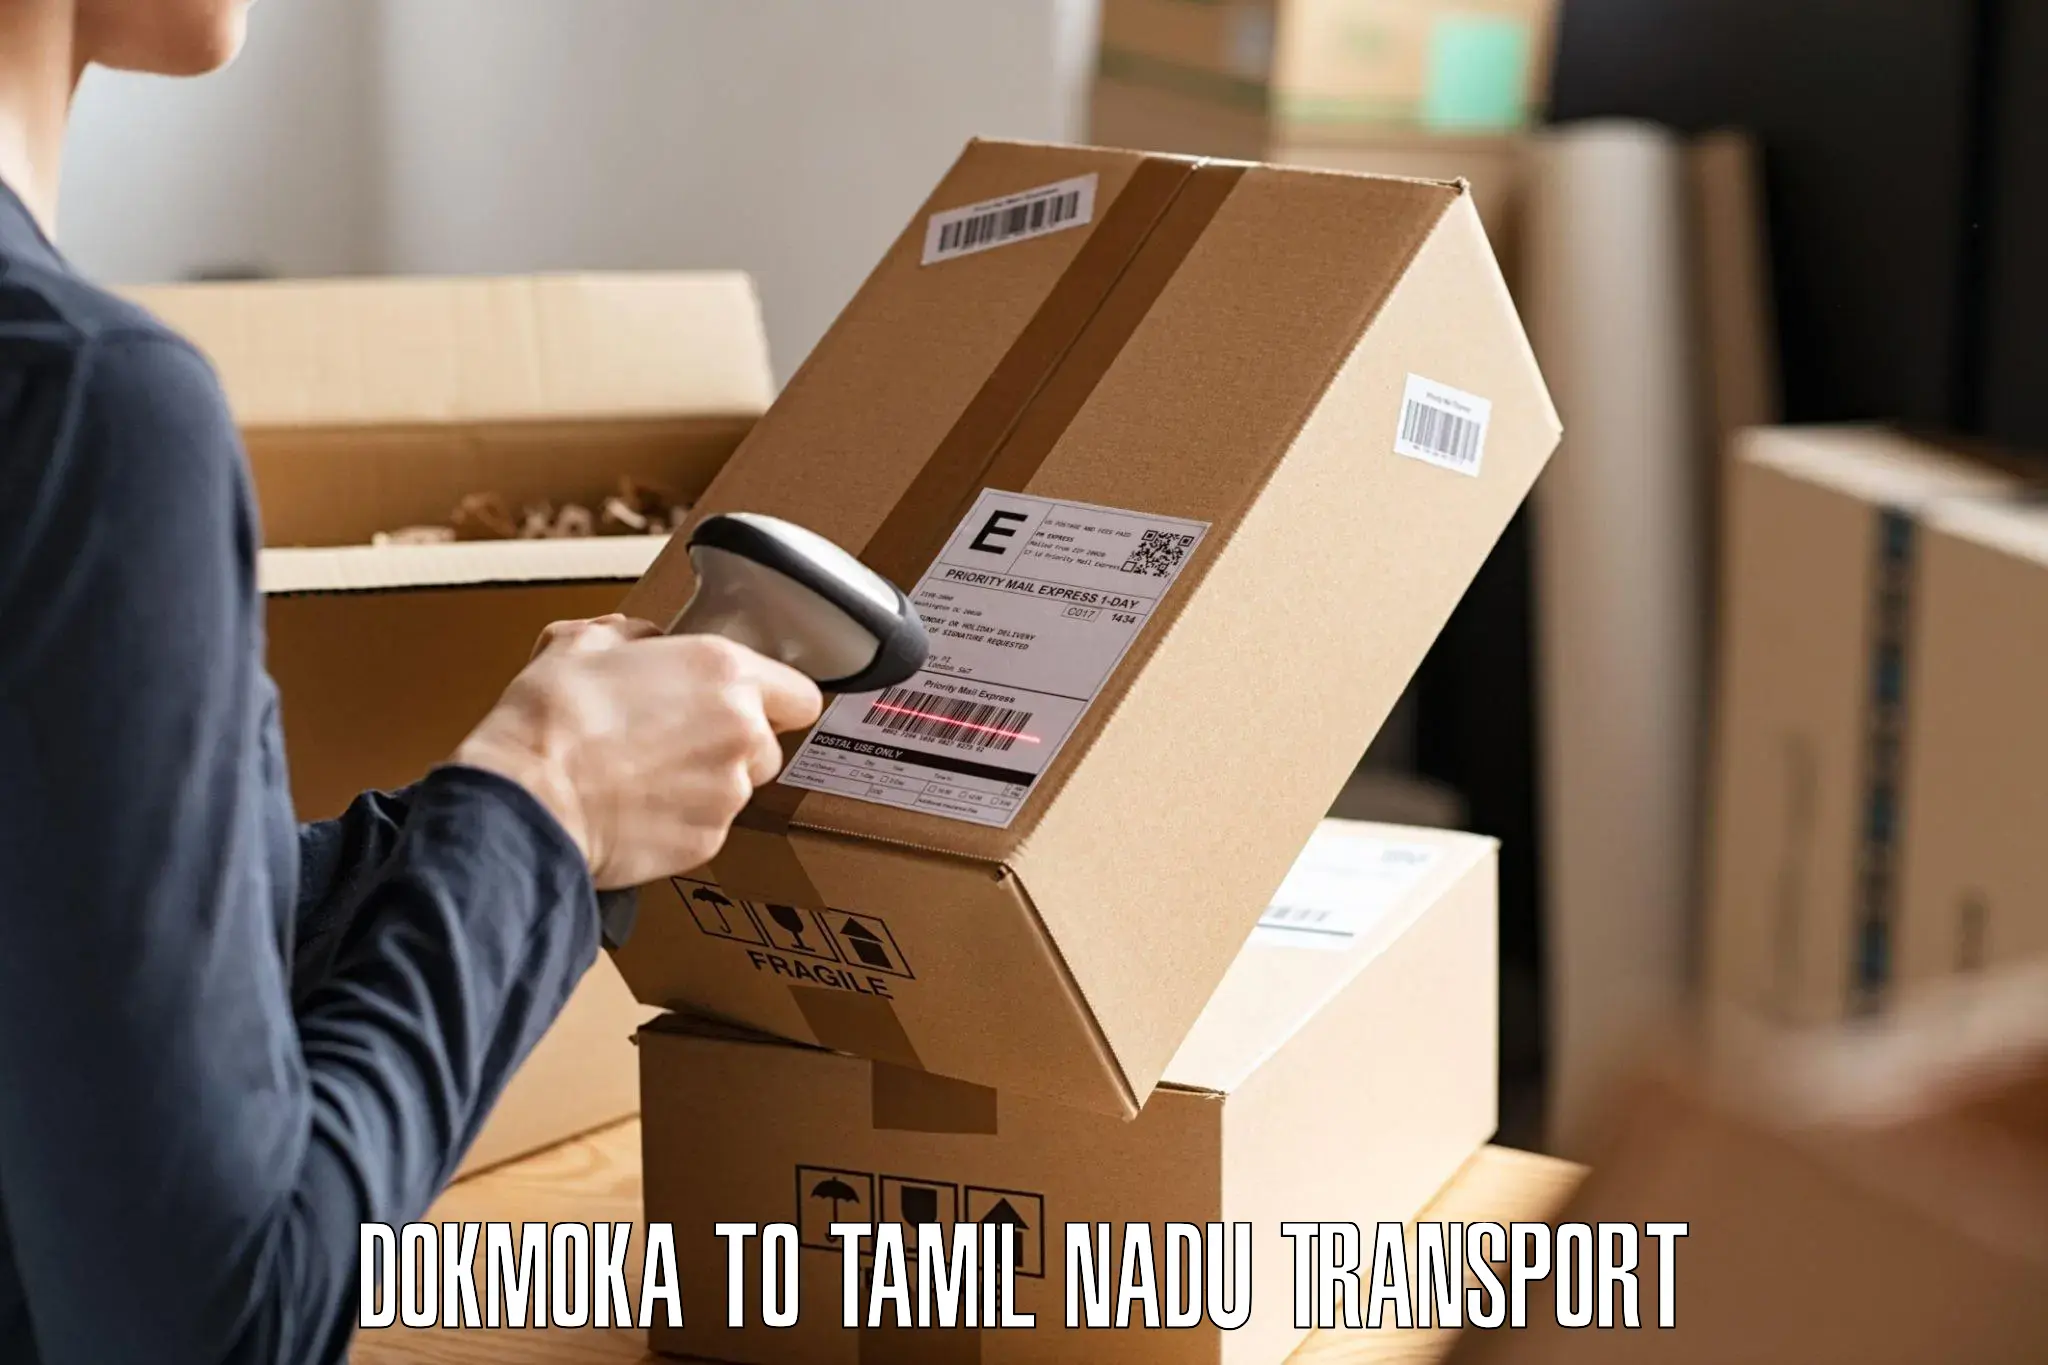 Nationwide transport services Dokmoka to Villupuram